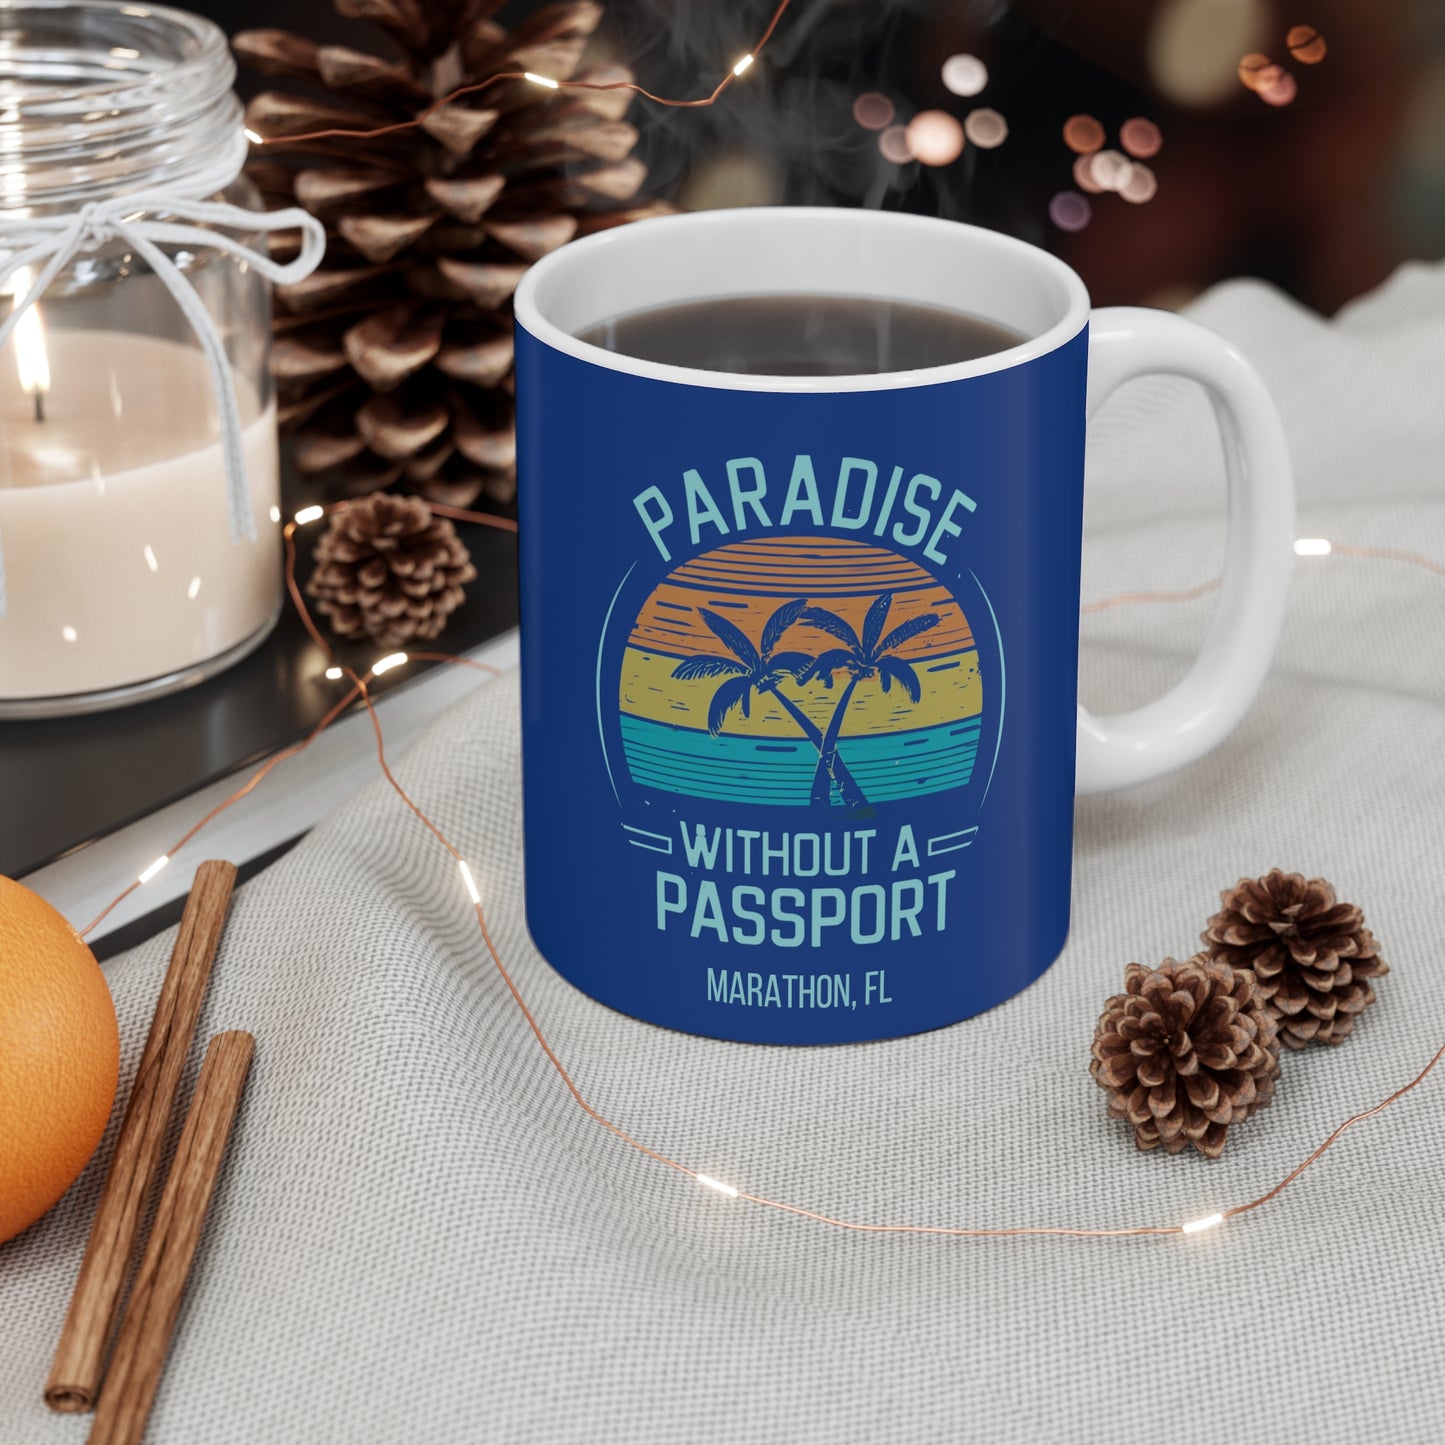 paradise without a passport mug - blue retro